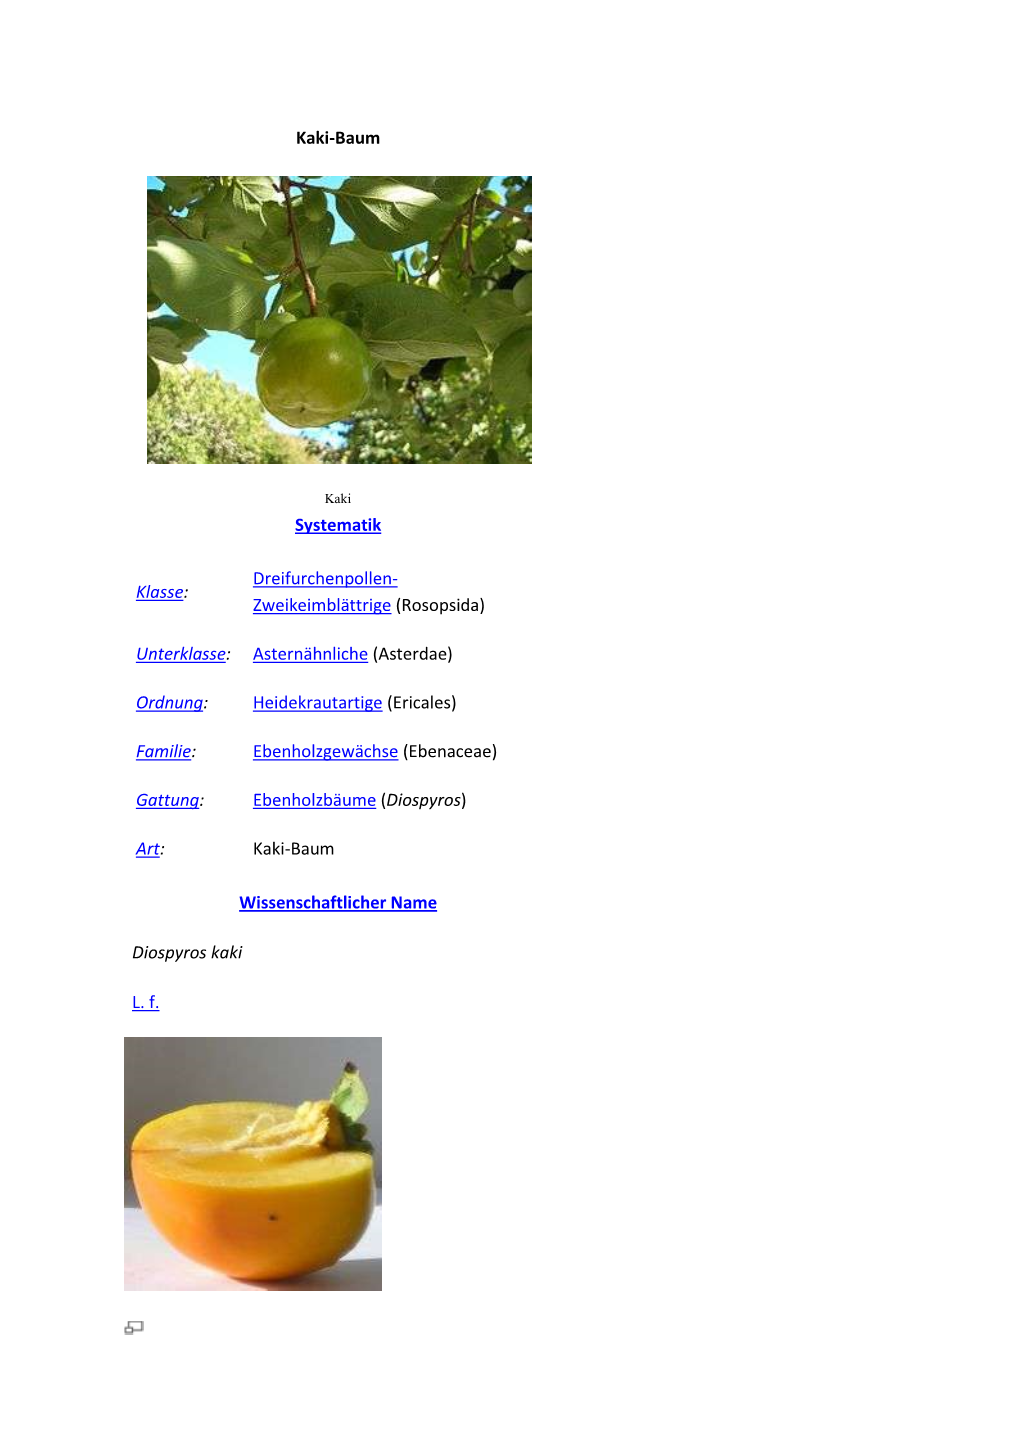 Kaki-Baum Systematik Klasse: Dreifurchenpollen